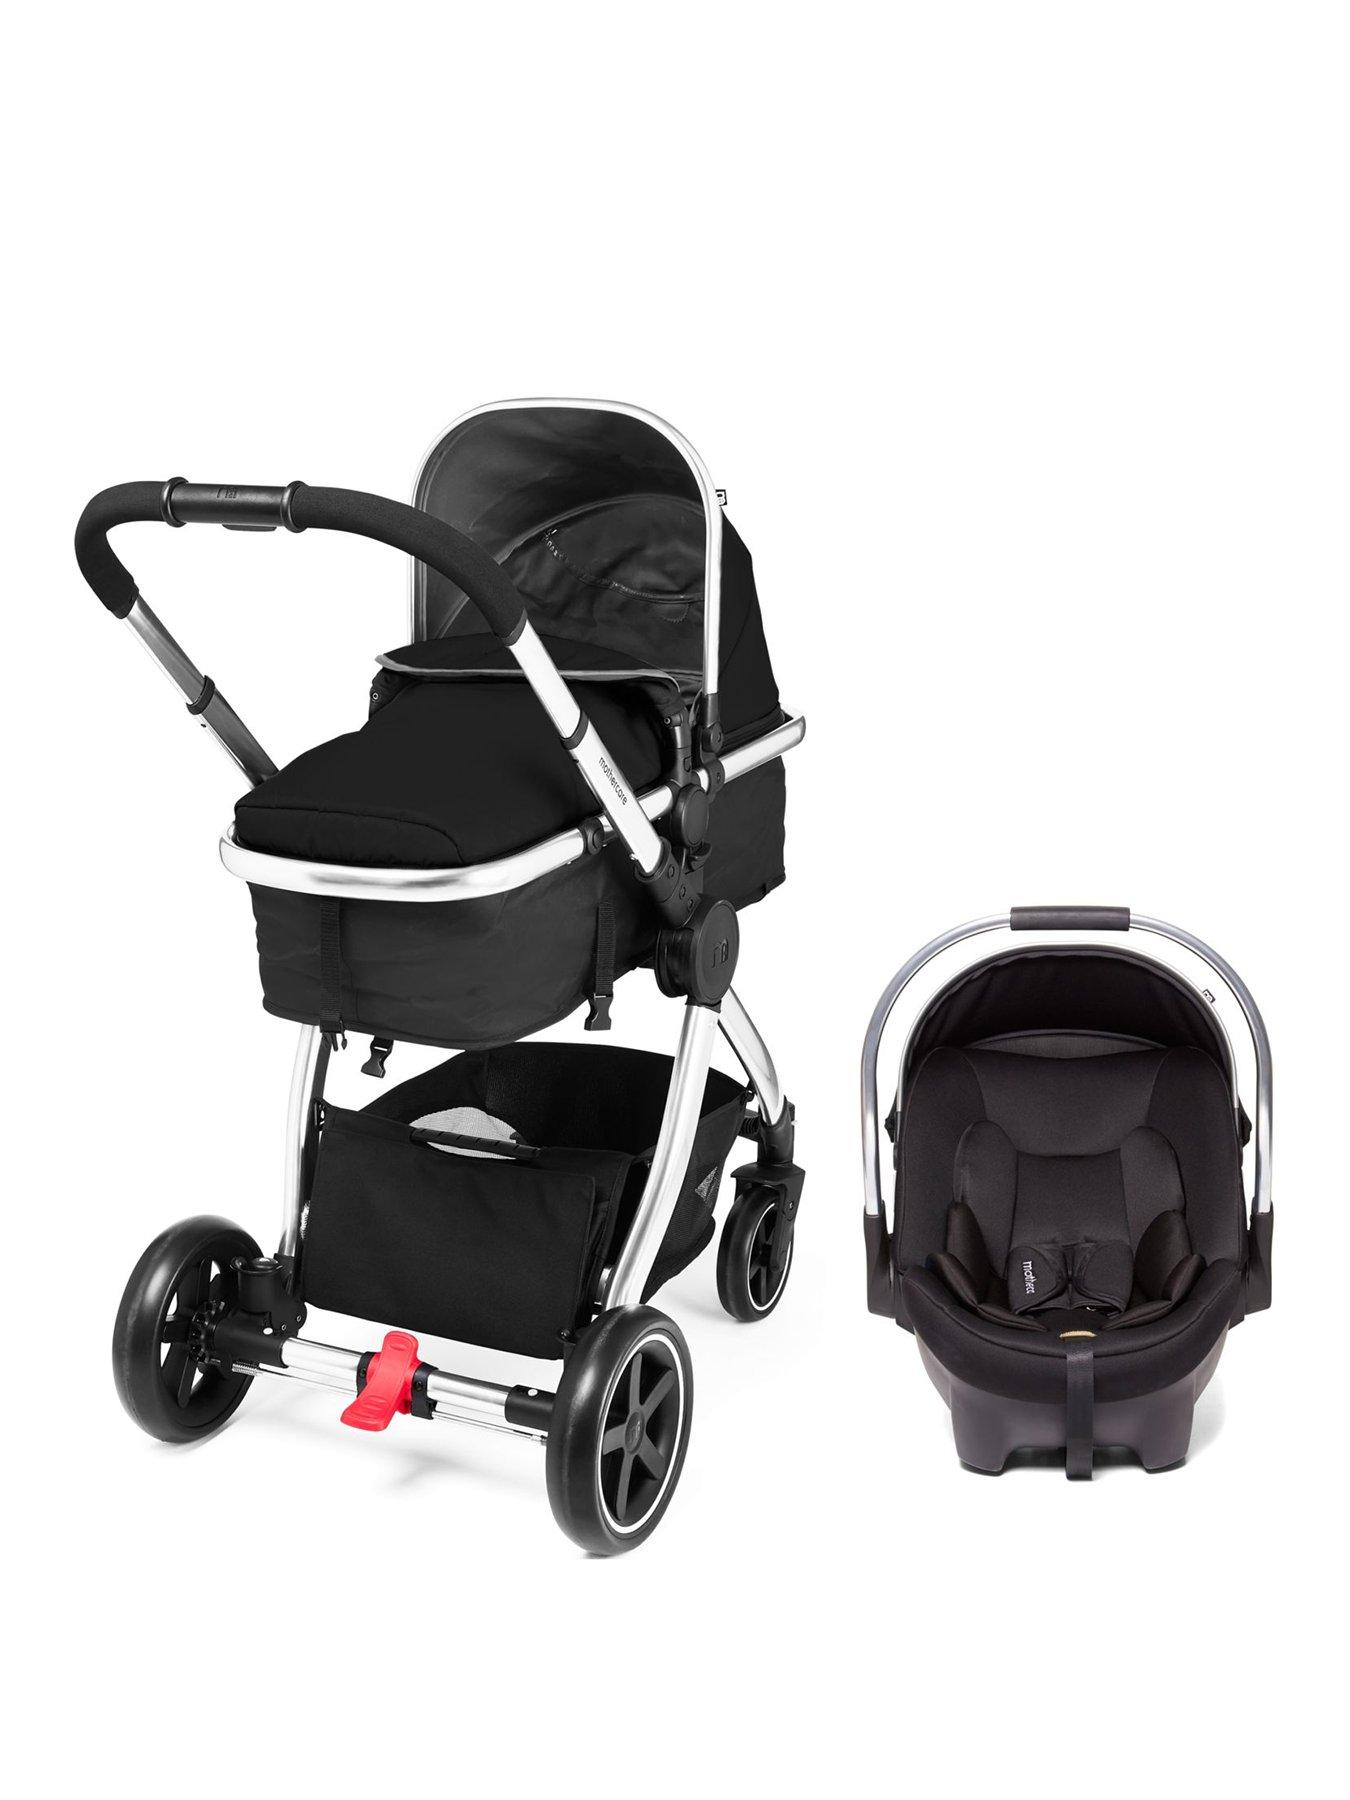 mothercare stroller uk